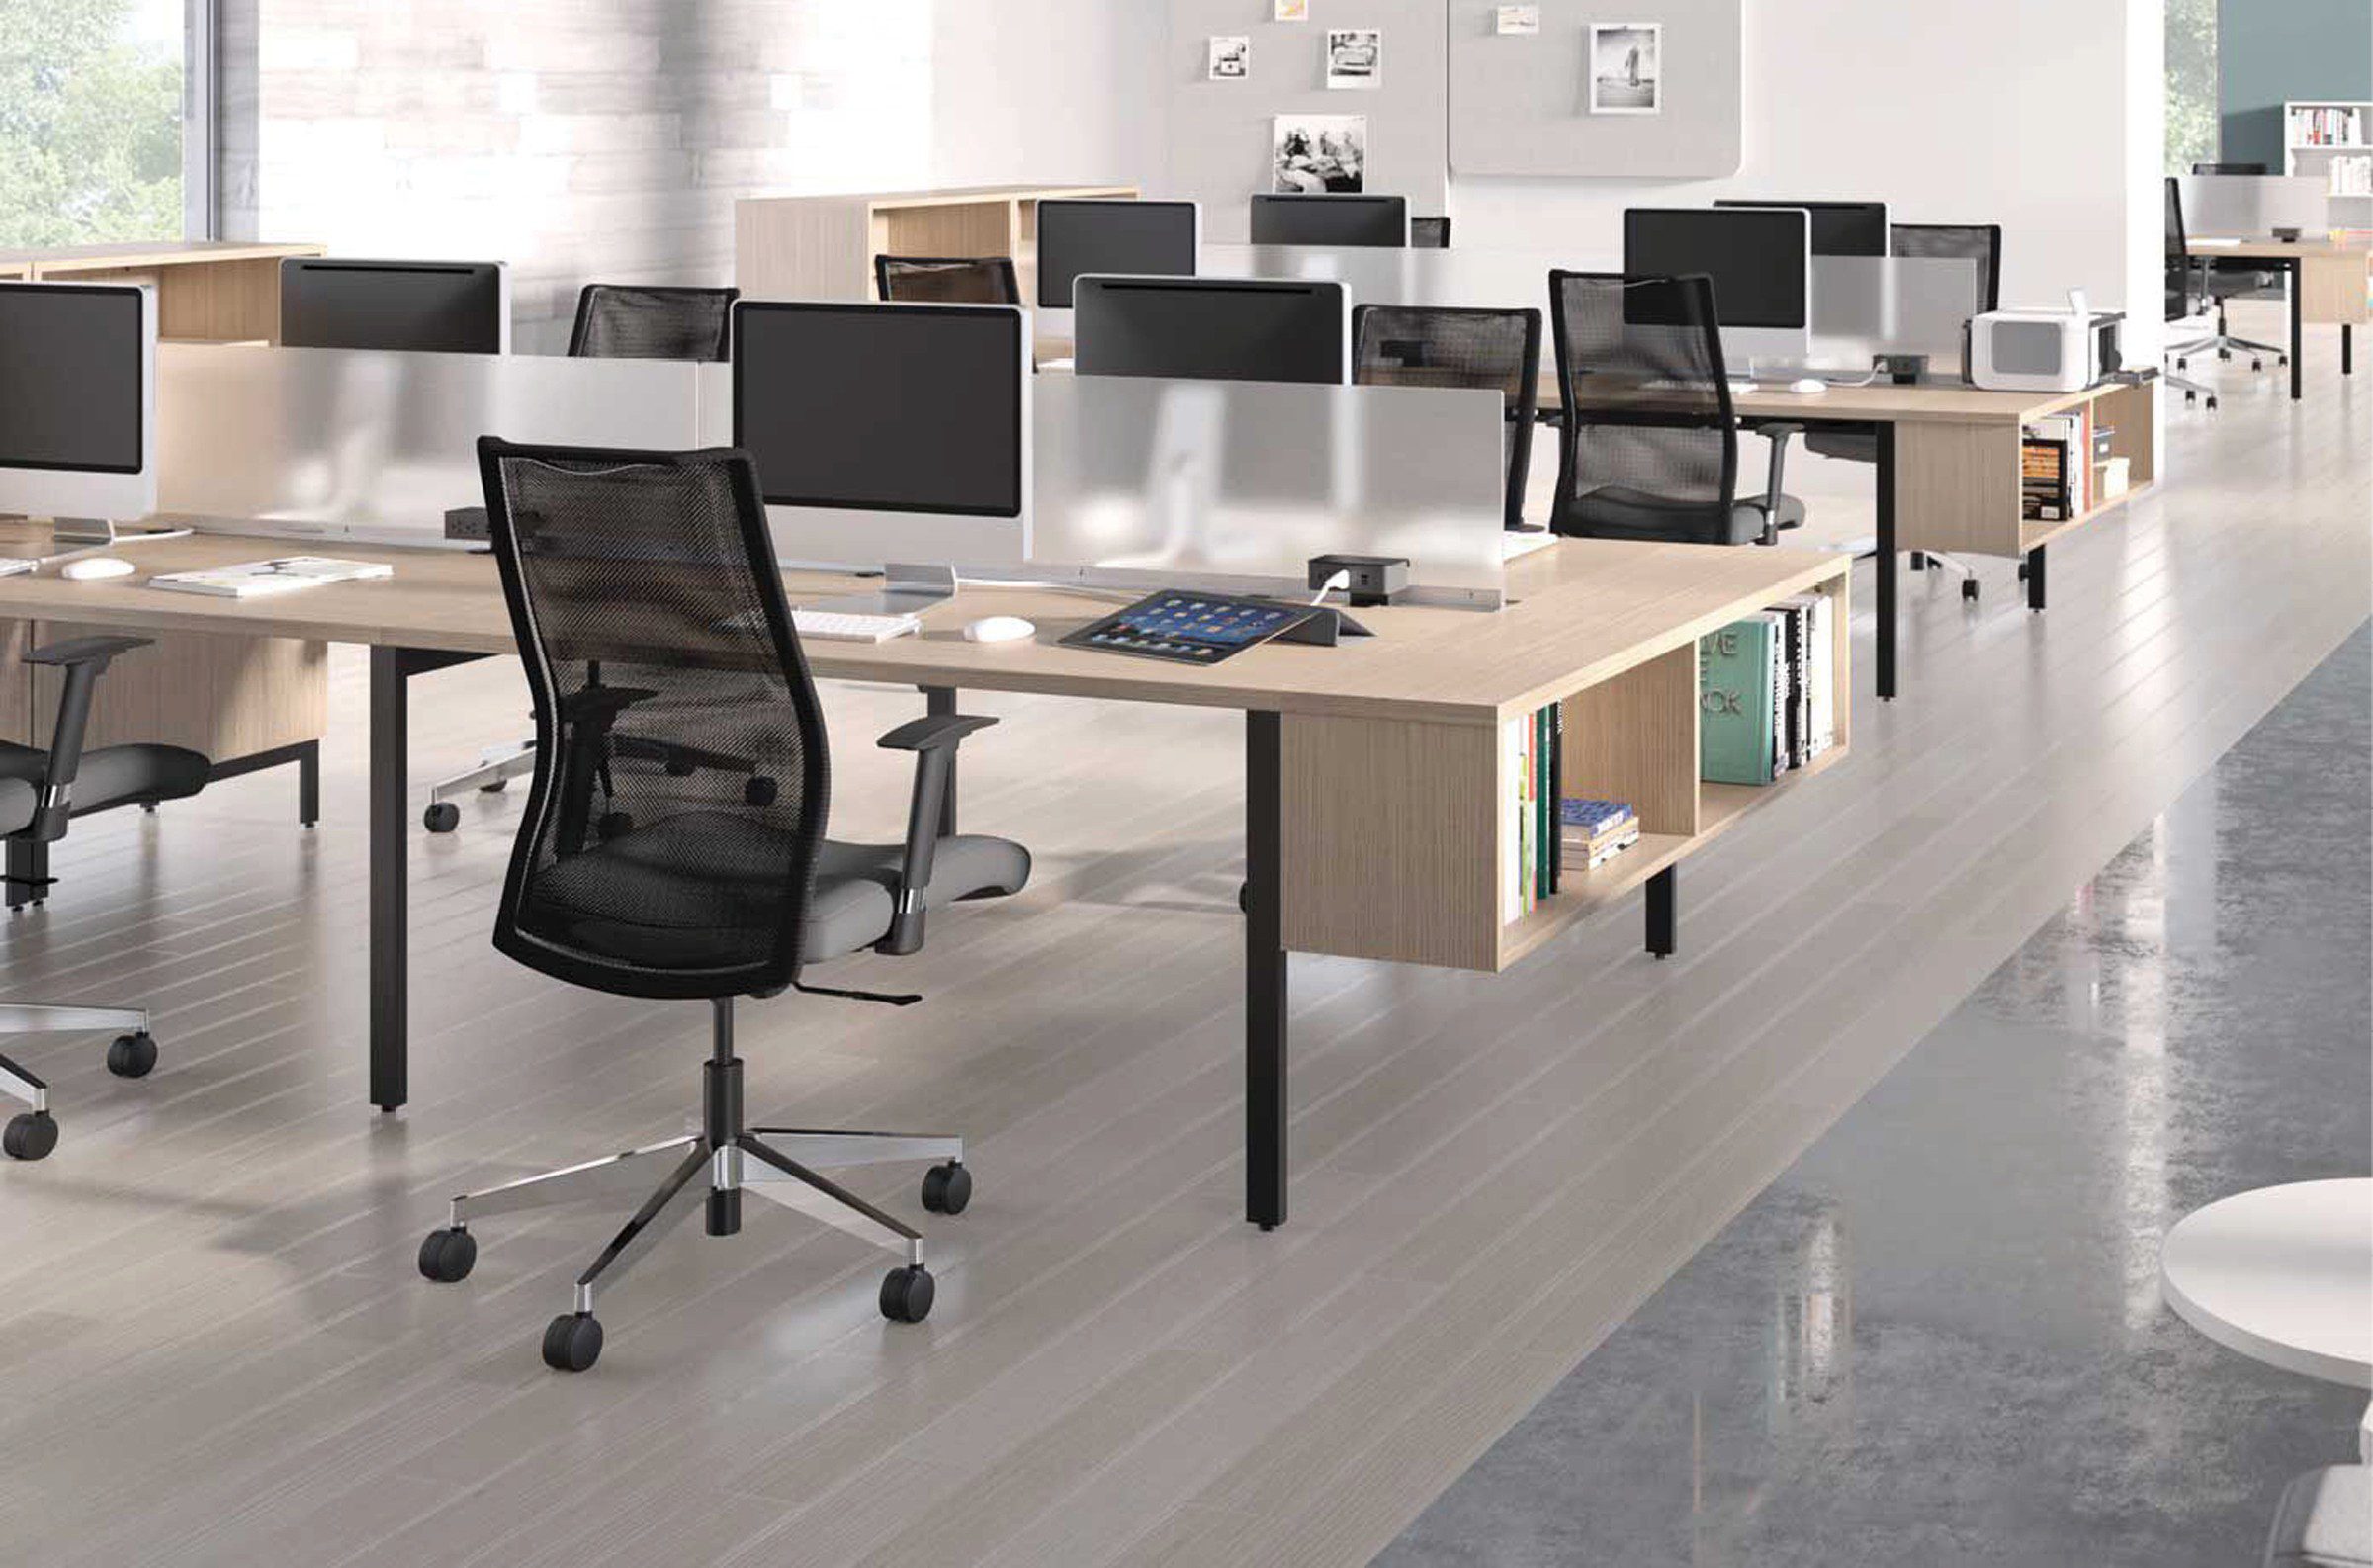 Modern workstation office furniture in an open-plan environment